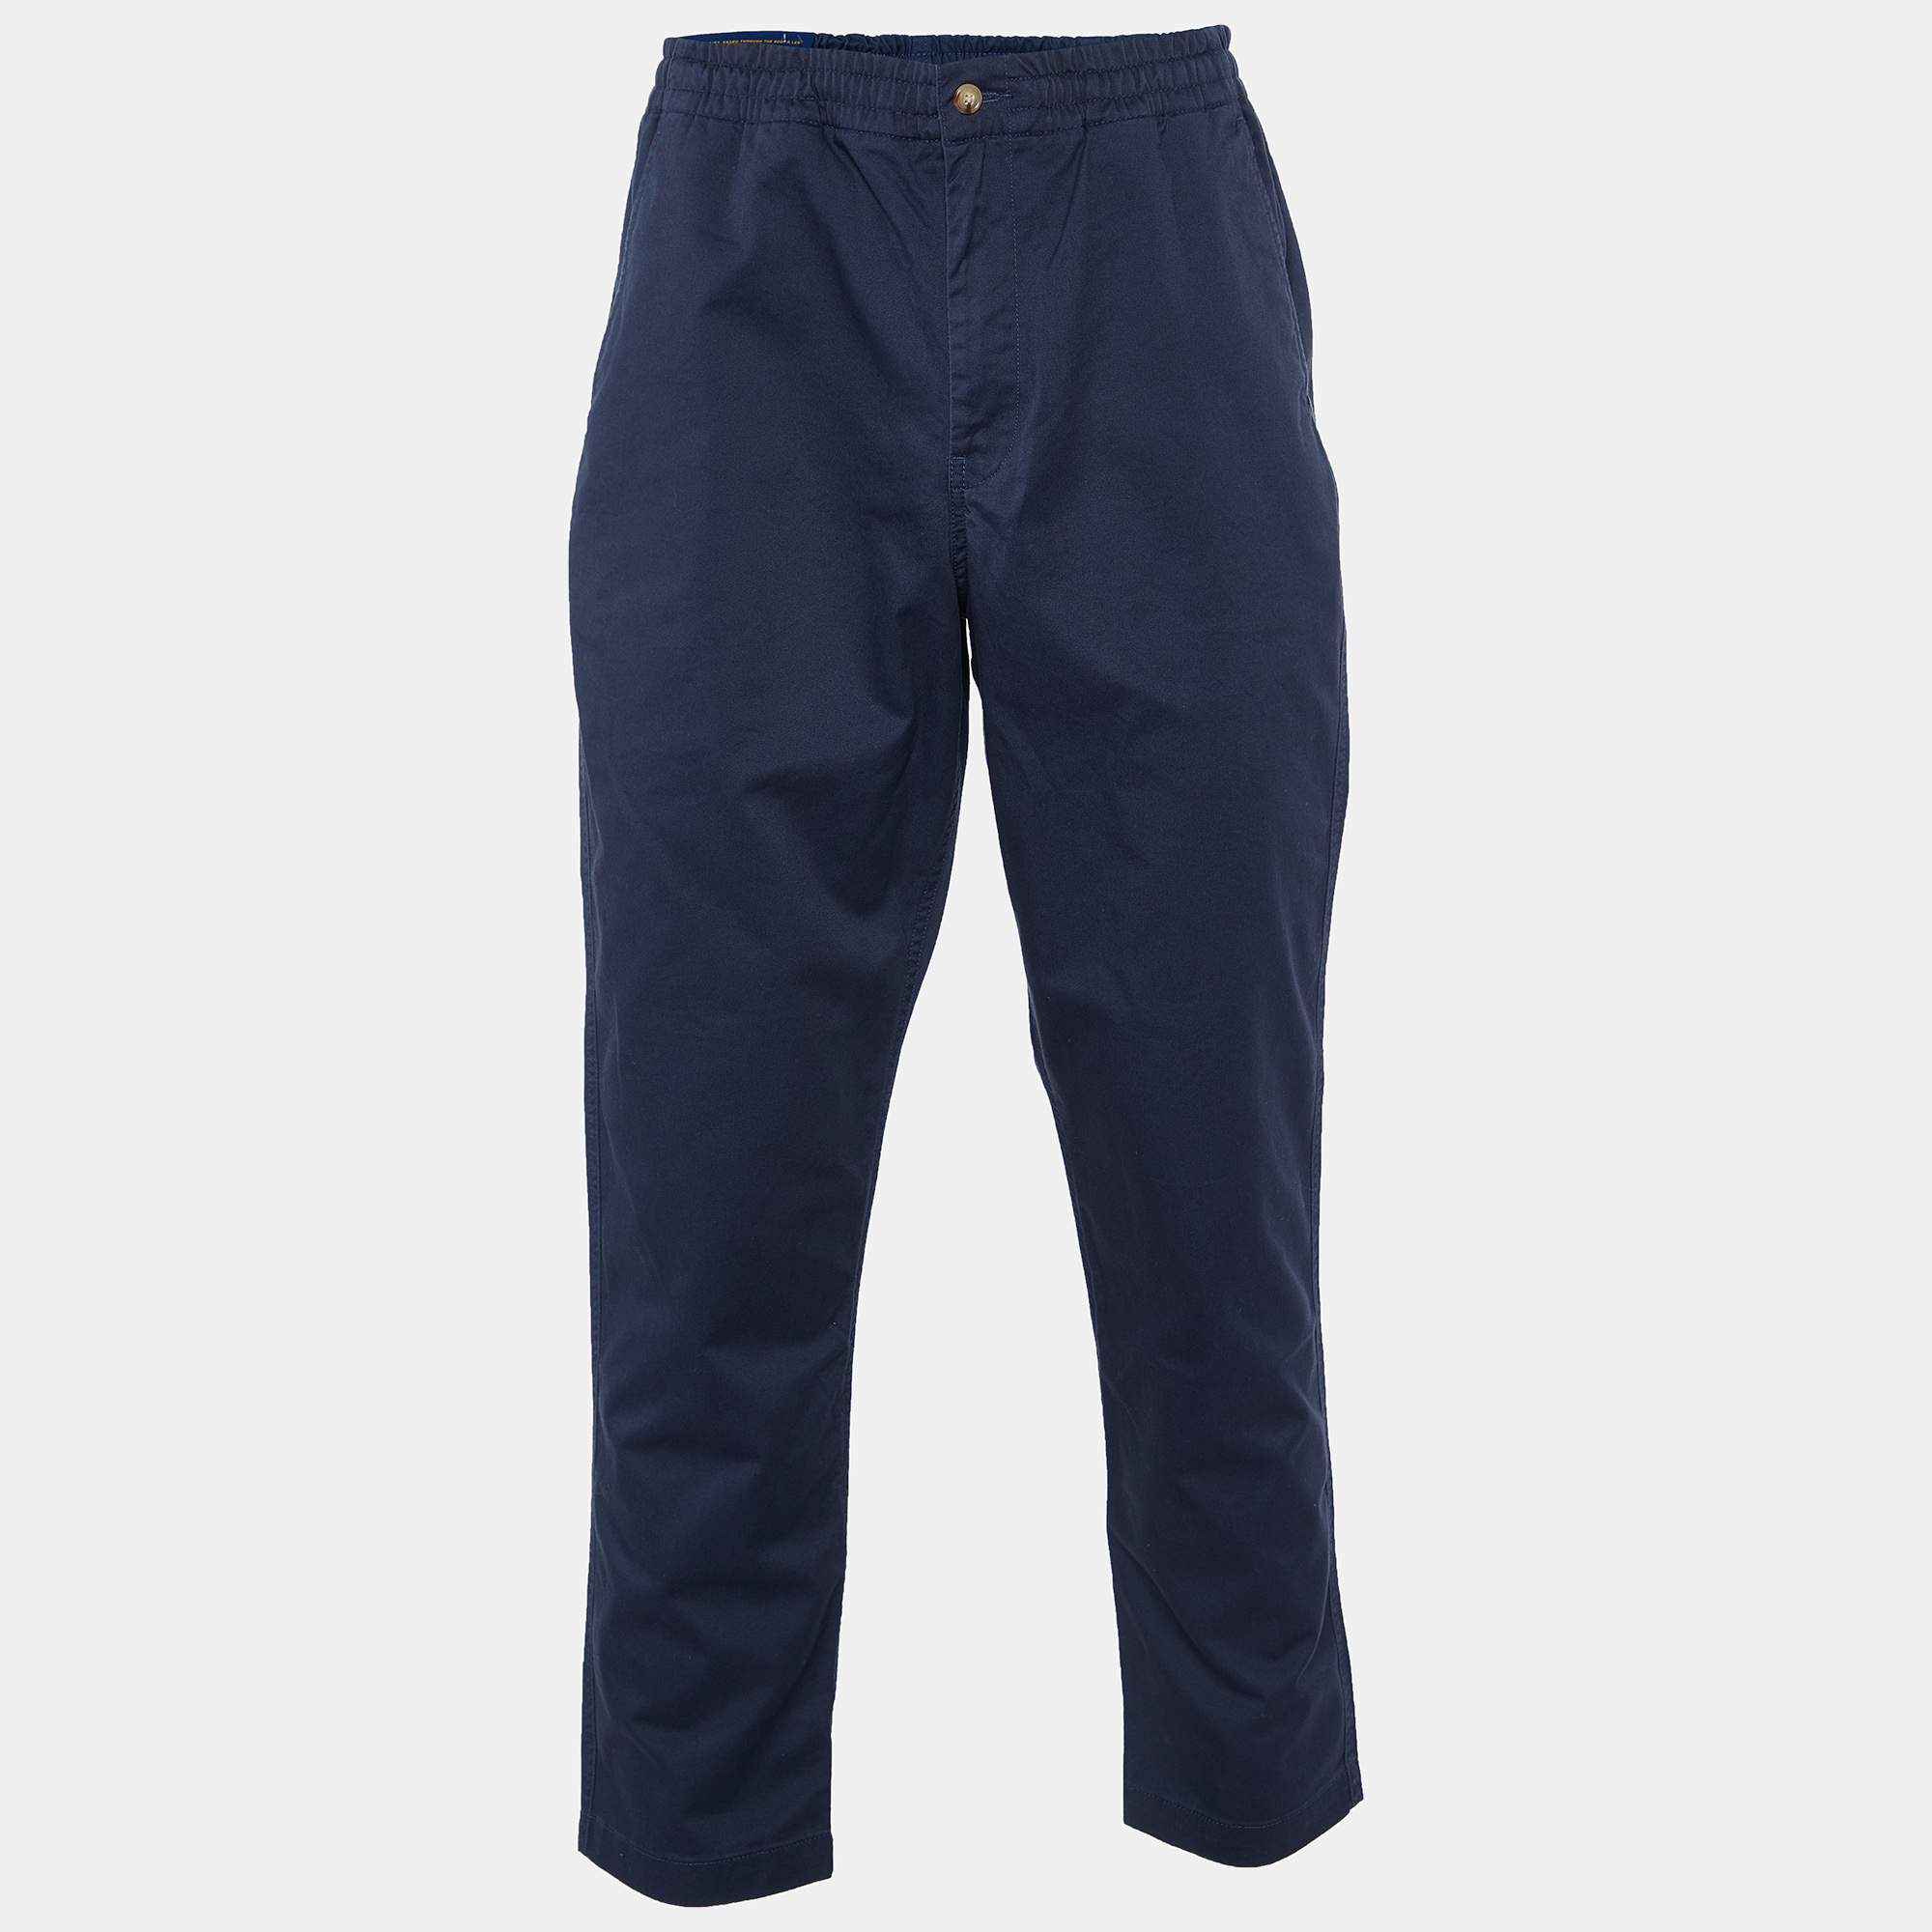 Polo ralph lauren navy blue cotton stretch classic fit trousers l